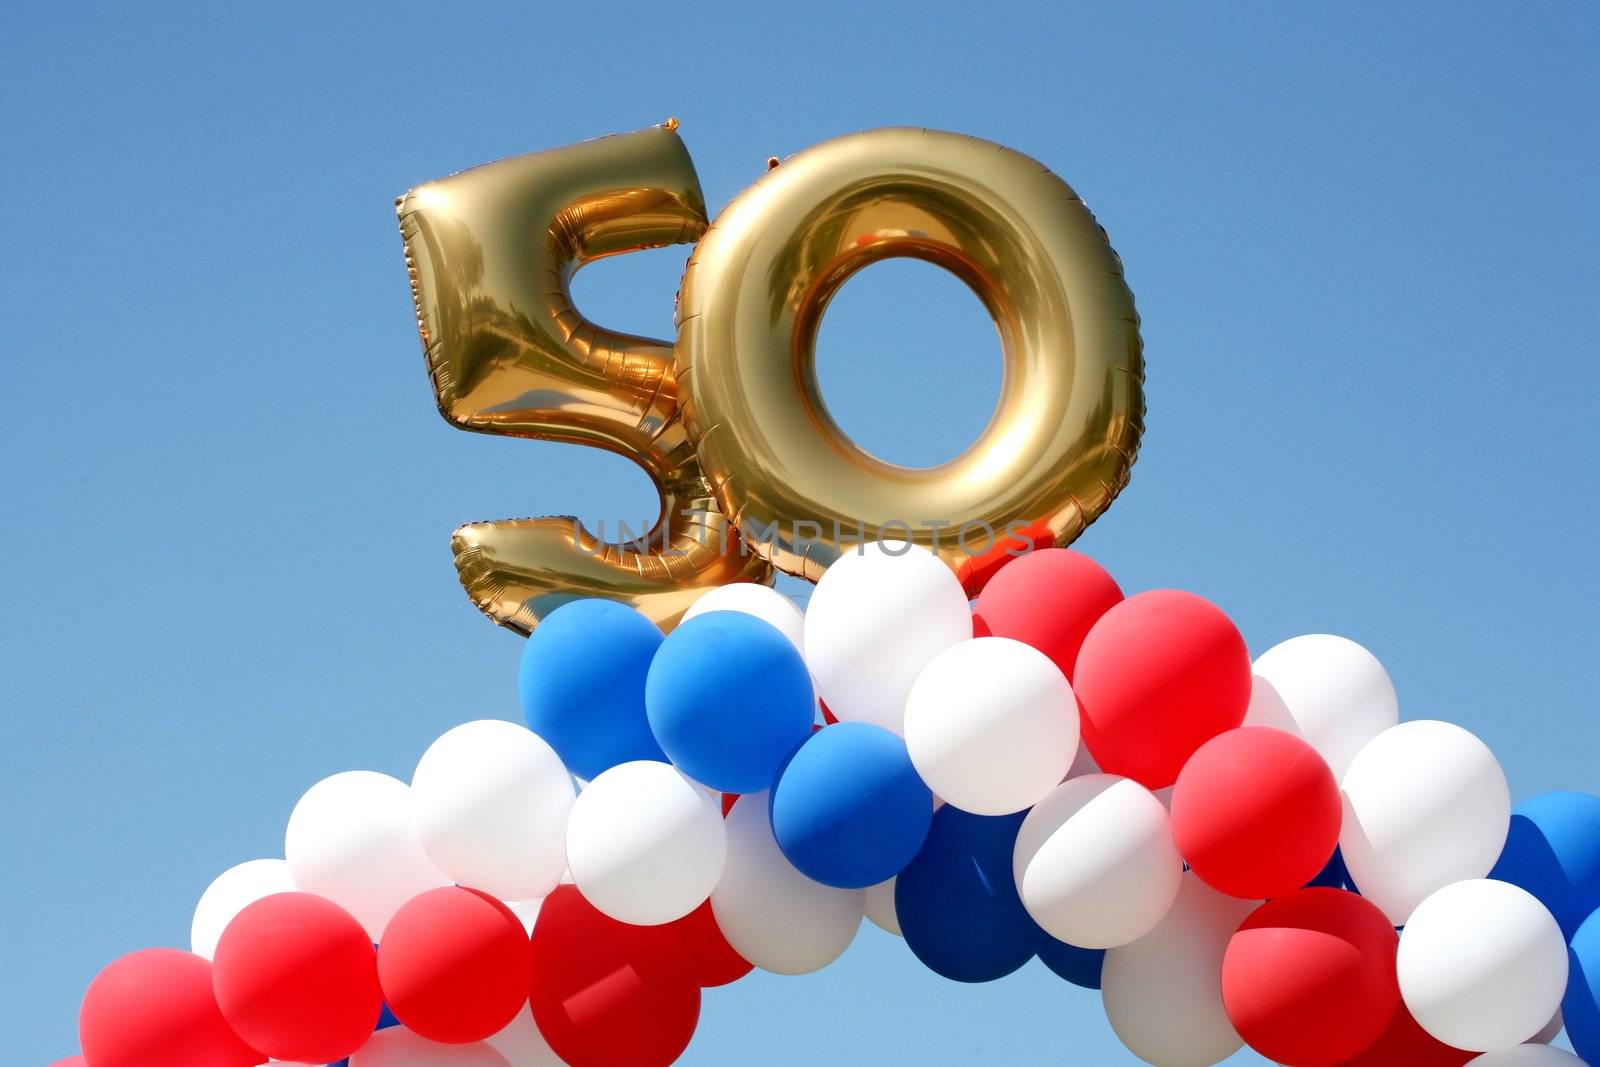 Balloon decorations celebrating 50 years